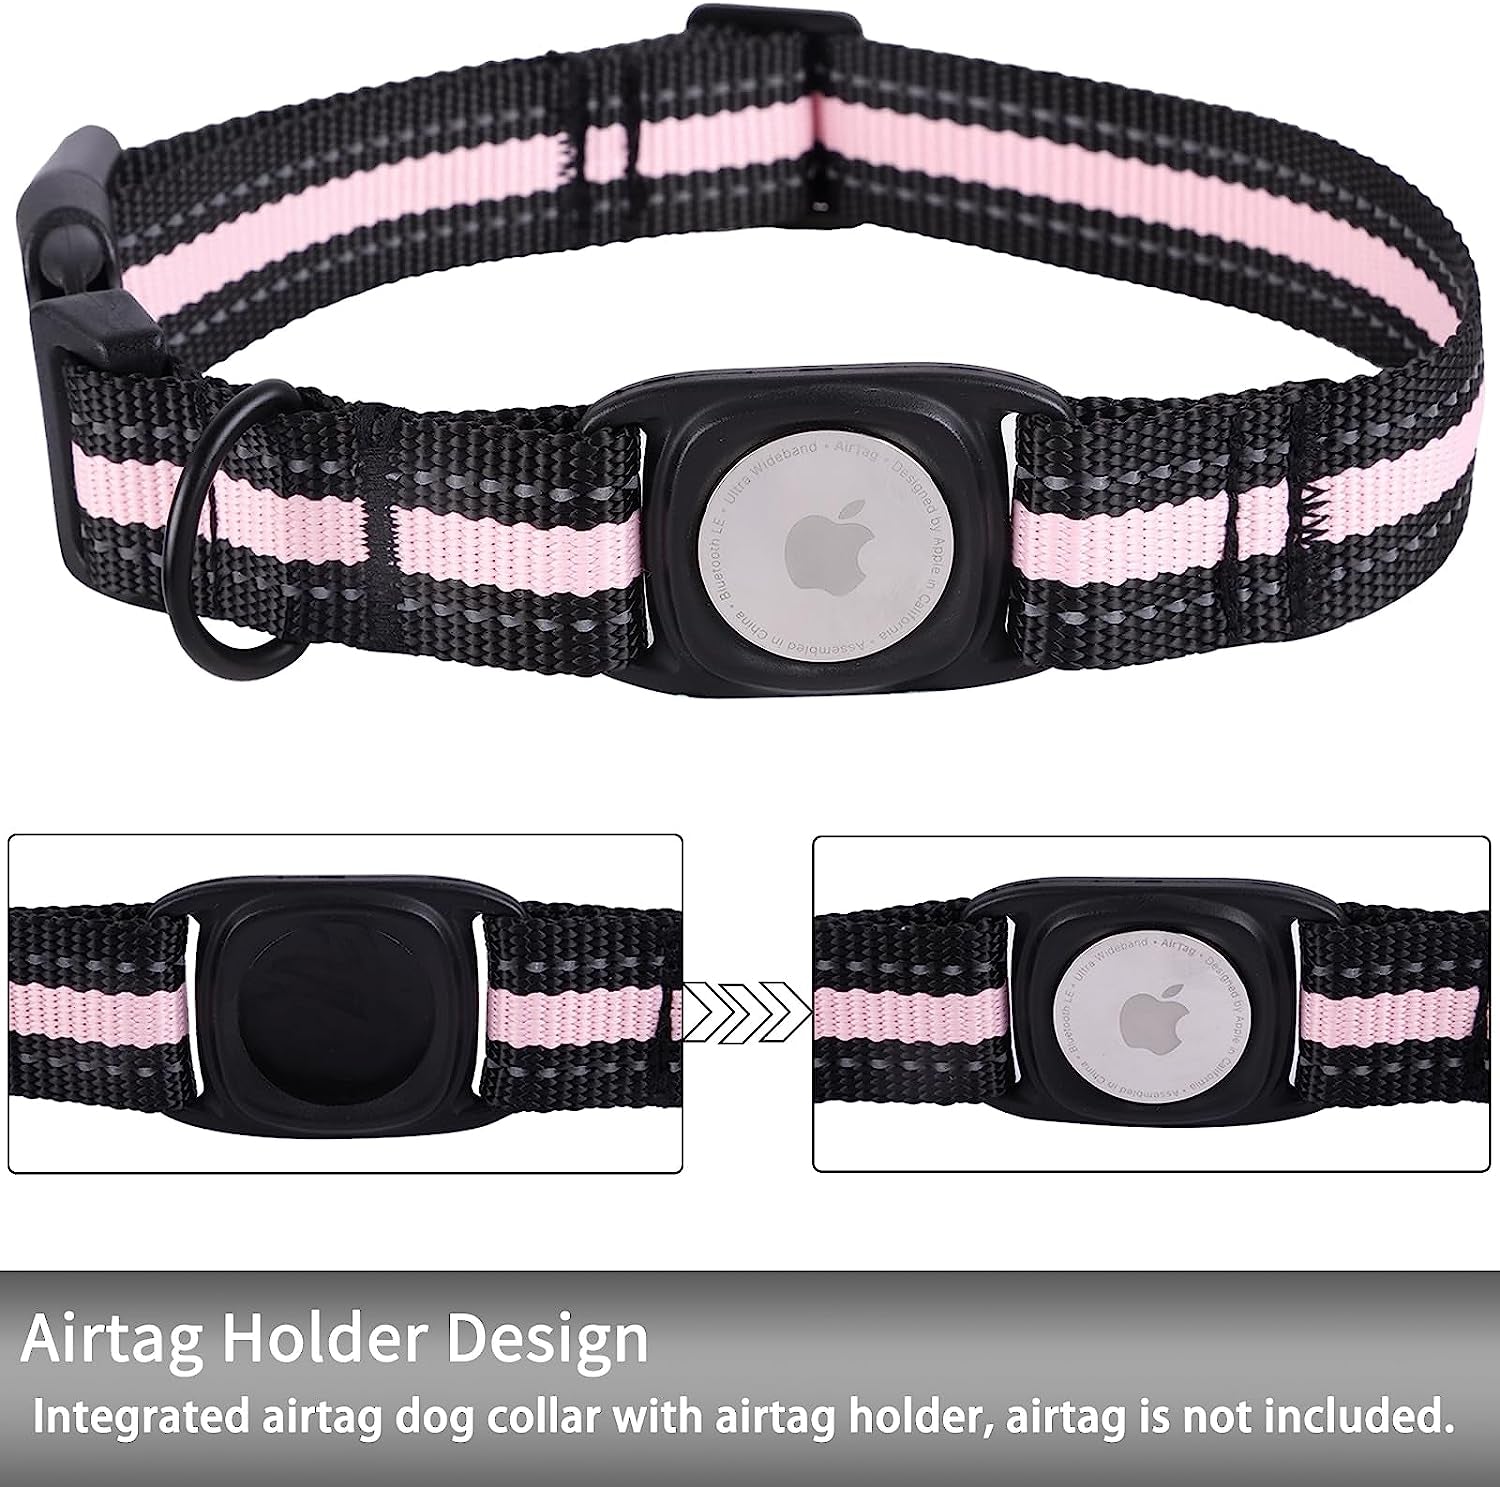 dog caller with airbag holder